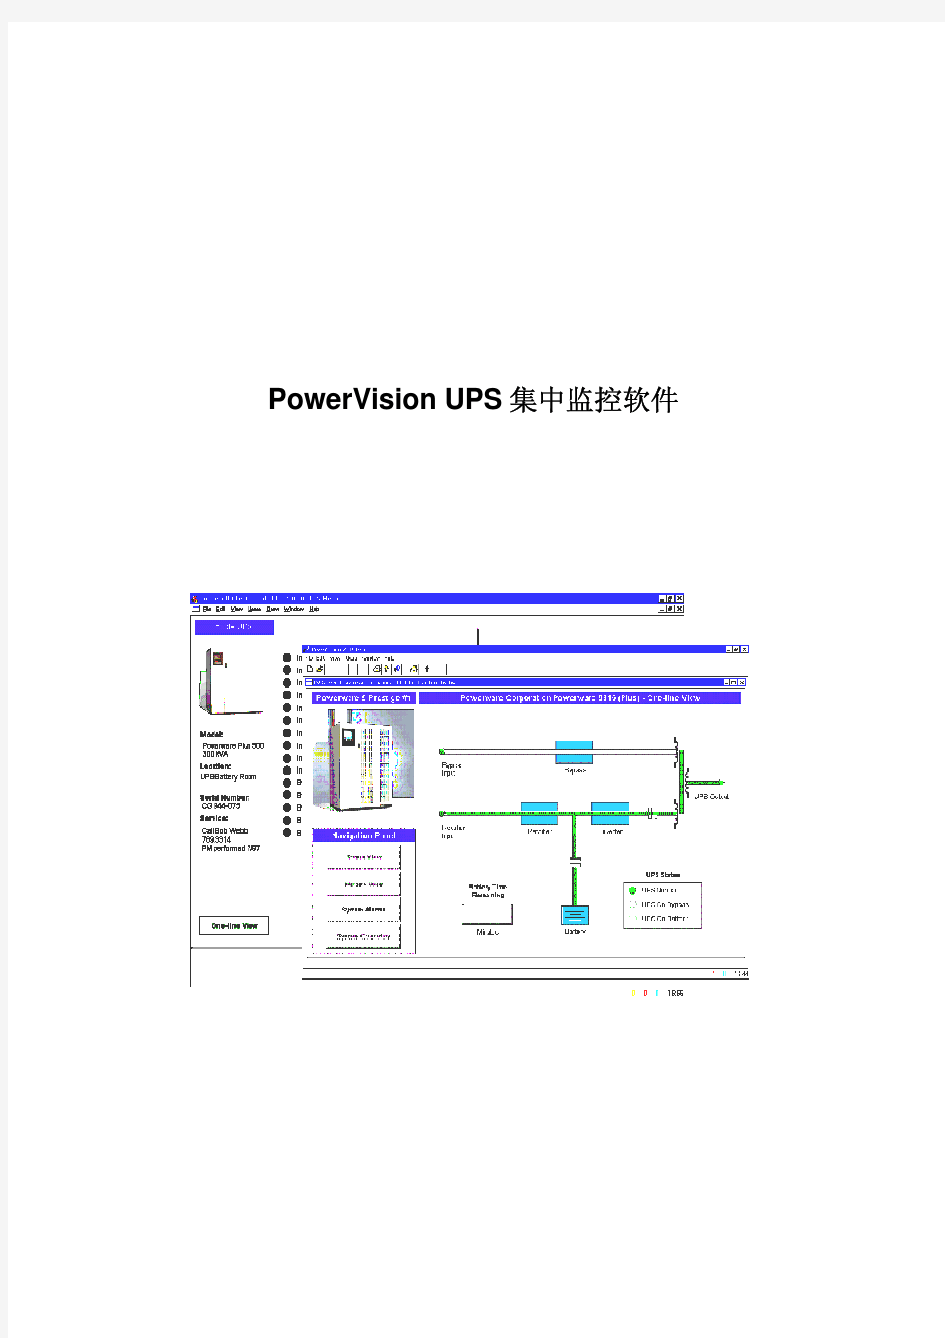 PowerVision UPS 集中监控软件